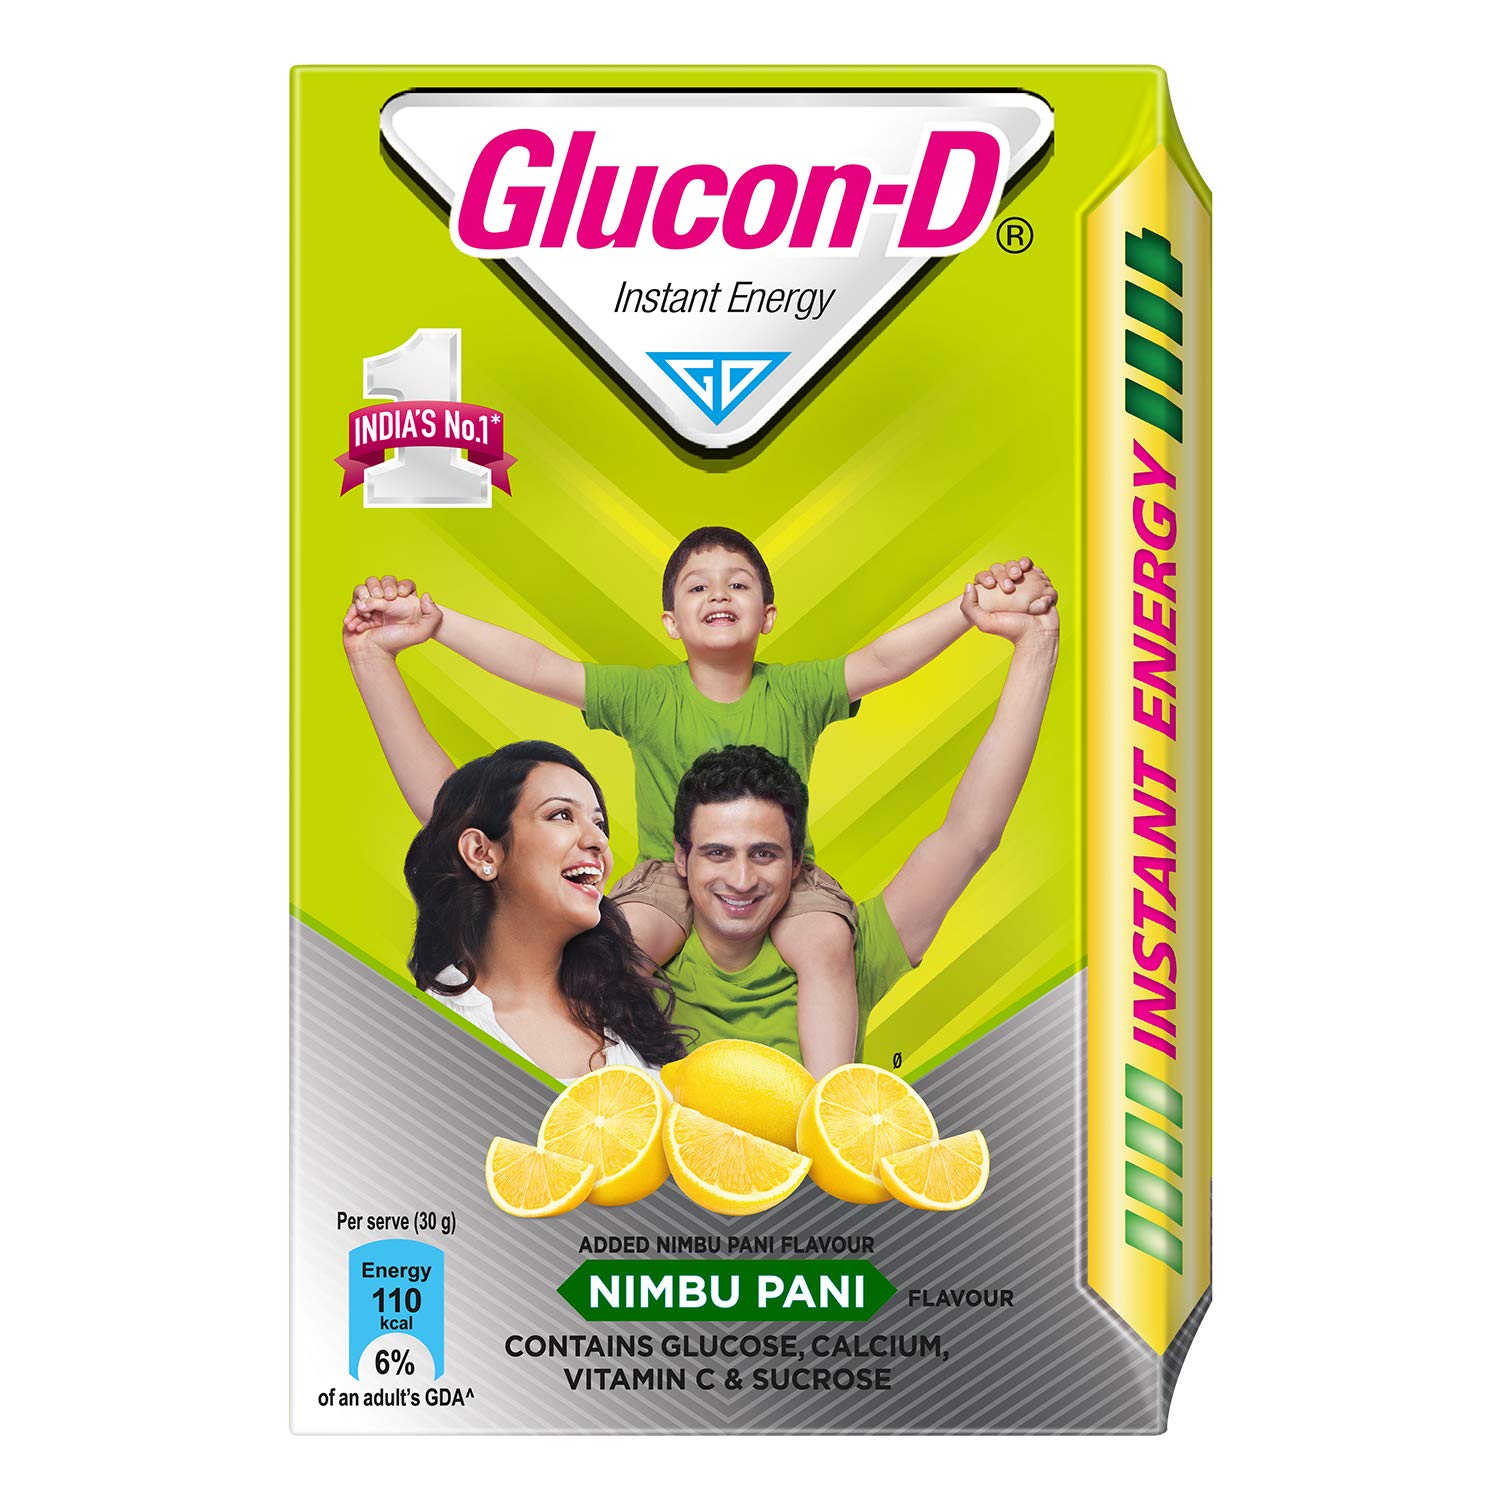 Glucon-D Instant Energy Health Drink (Nimbu Pani) - 450gm Refill, Glucon-D 